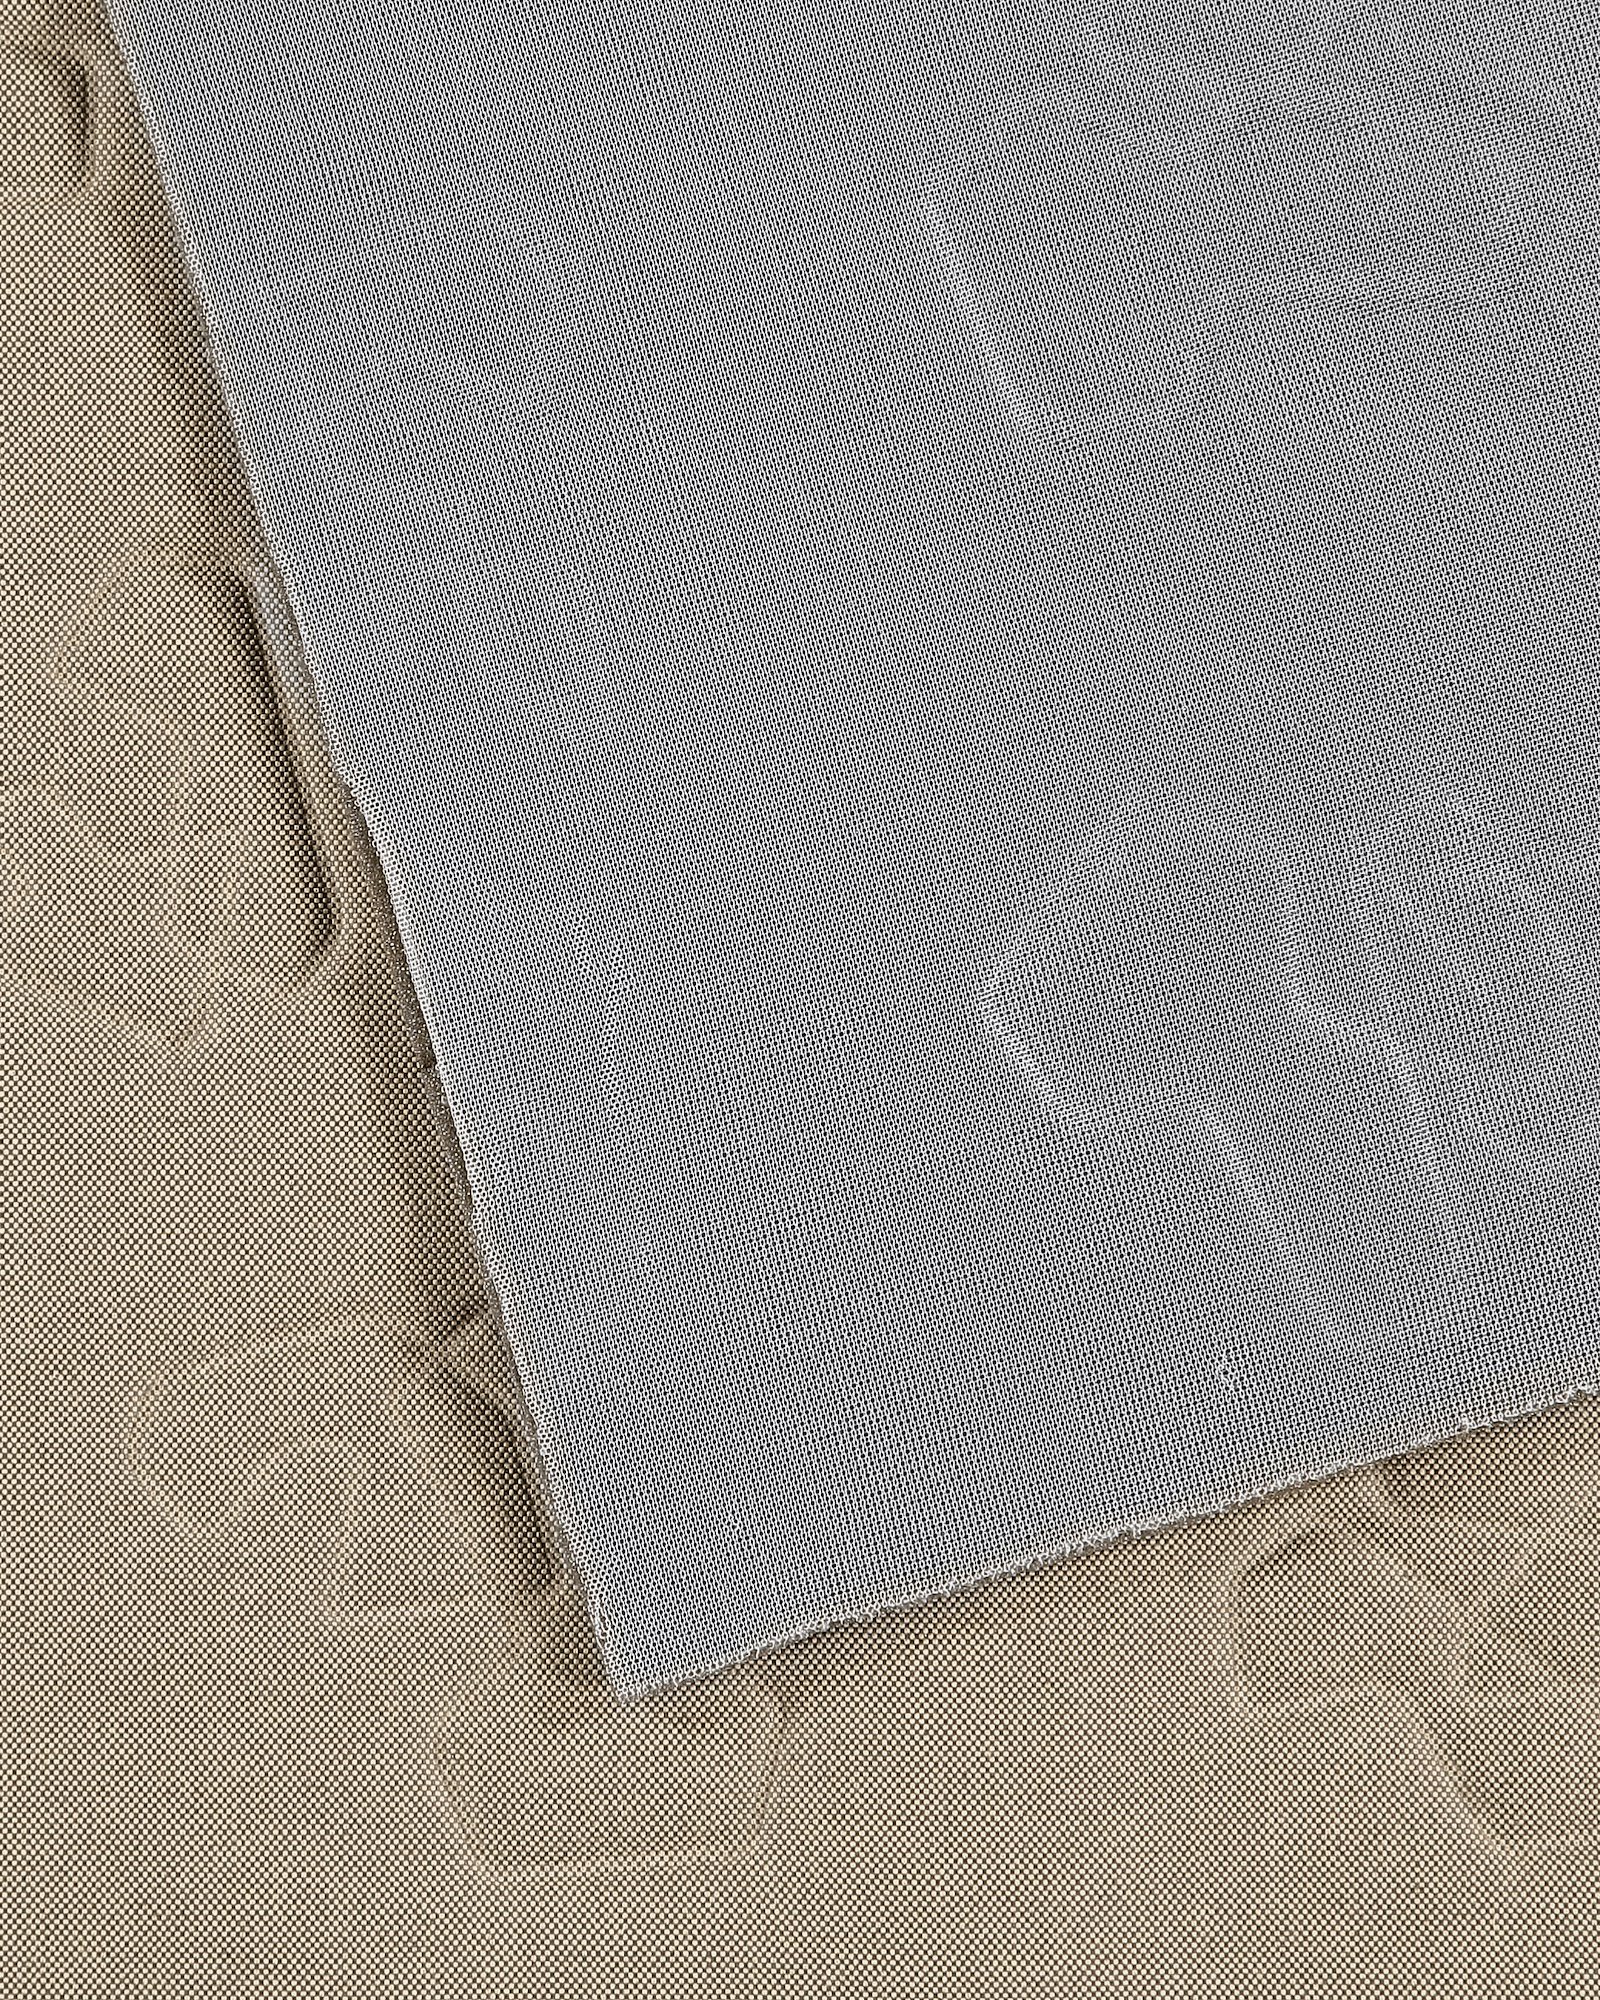 Trevira CS upholstery grey quilt effect 823783_pack